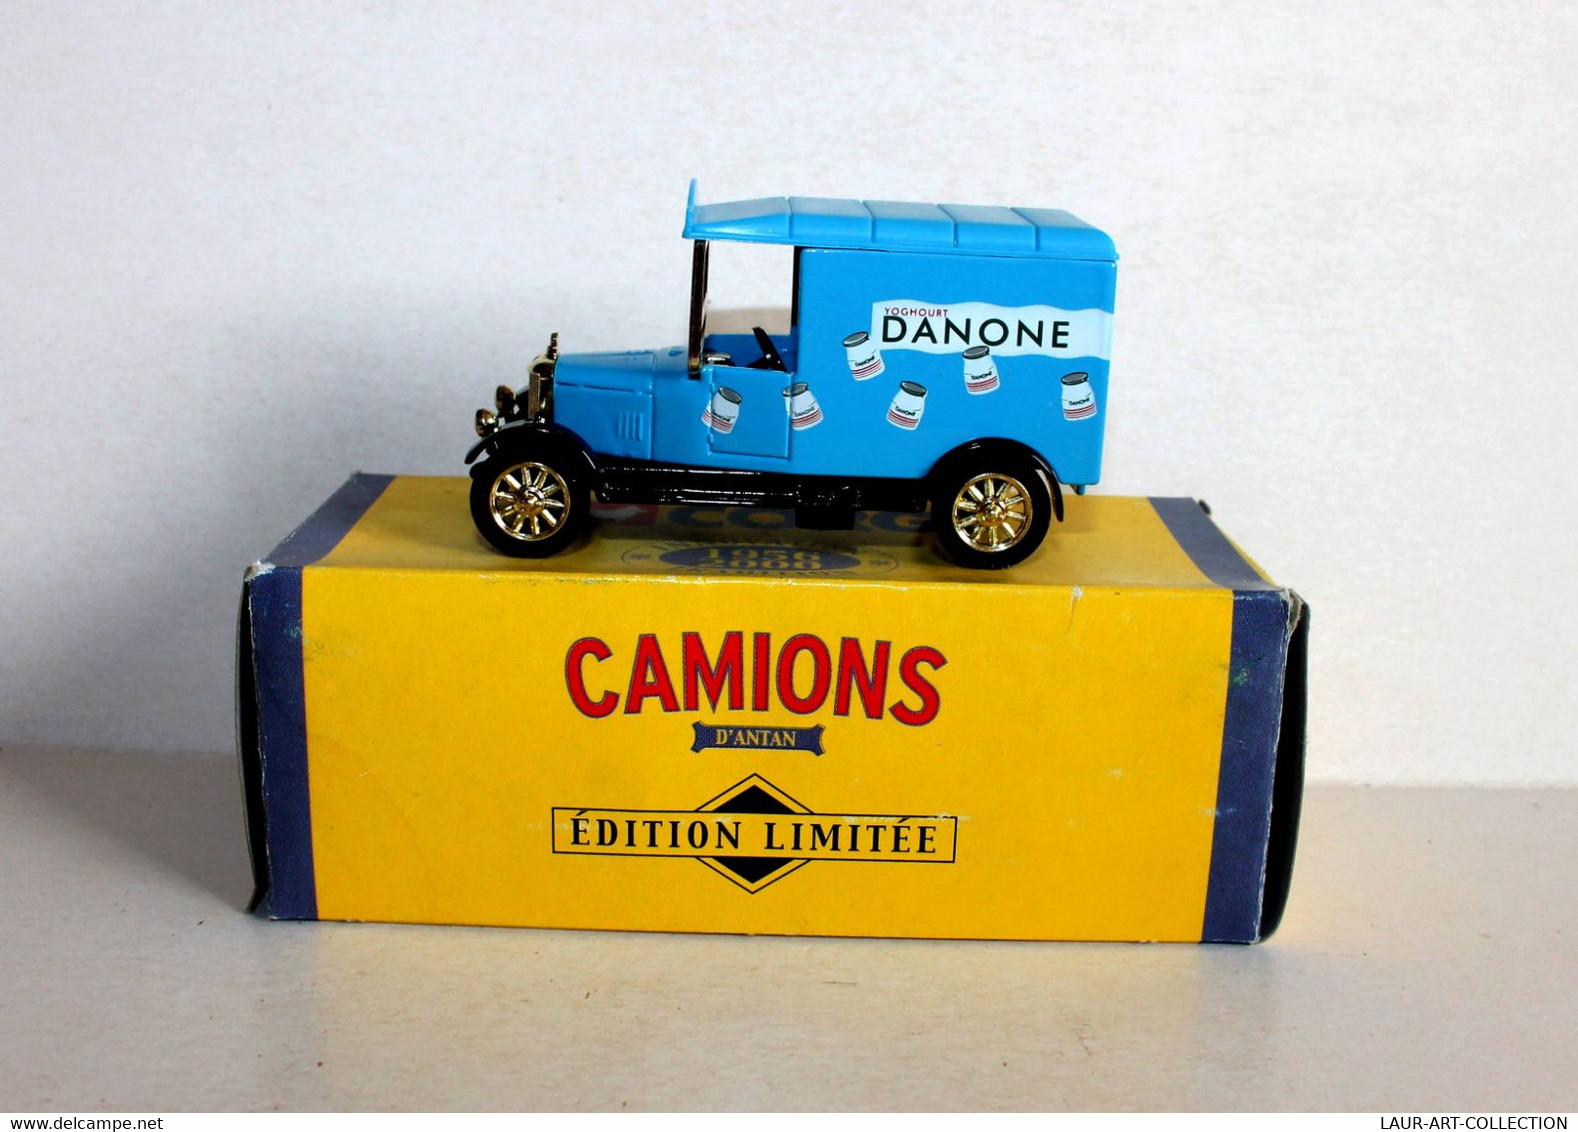 CORGI - CAMION LIVRAISON BULLNOSE MORRIS VAN 1924, PUB DANONE, D'ANTAN 1956-2000 - AUTOMOBILE MINIATURE (2811.32) - Corgi Toys